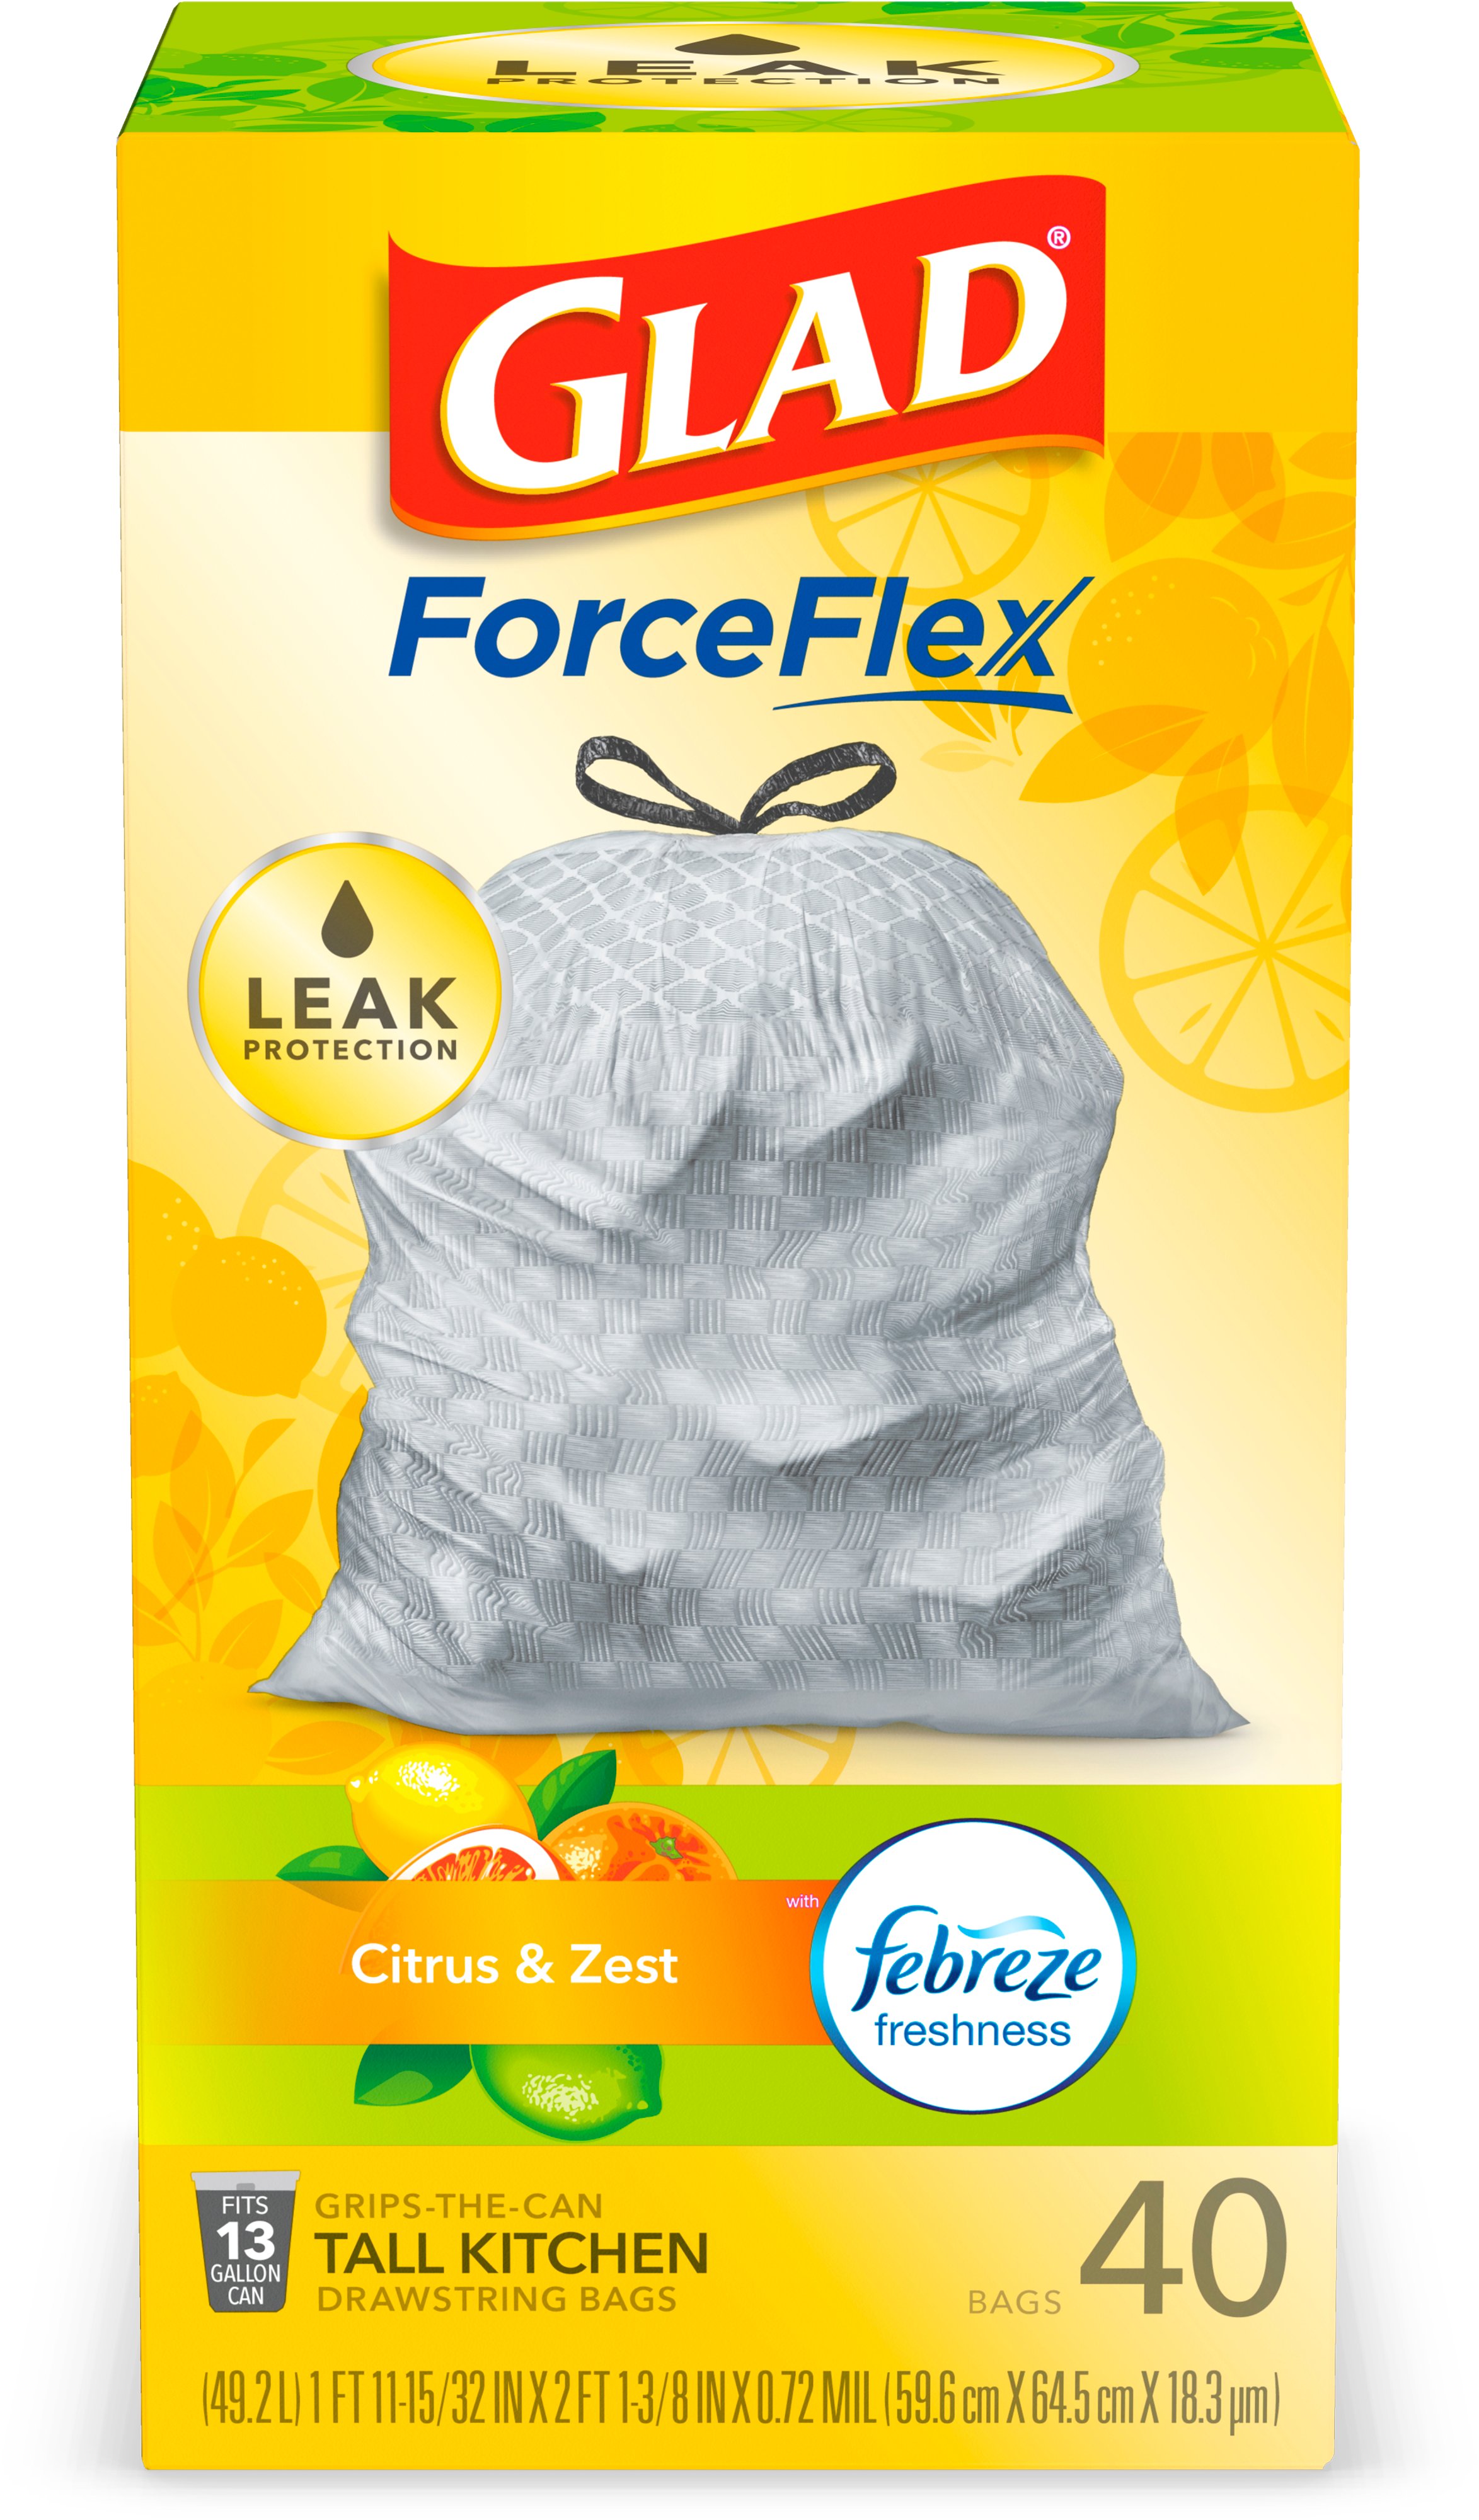 Glad ForceFlex Febreze Citrus & Zest Scent Drawstring Tall Kitchen